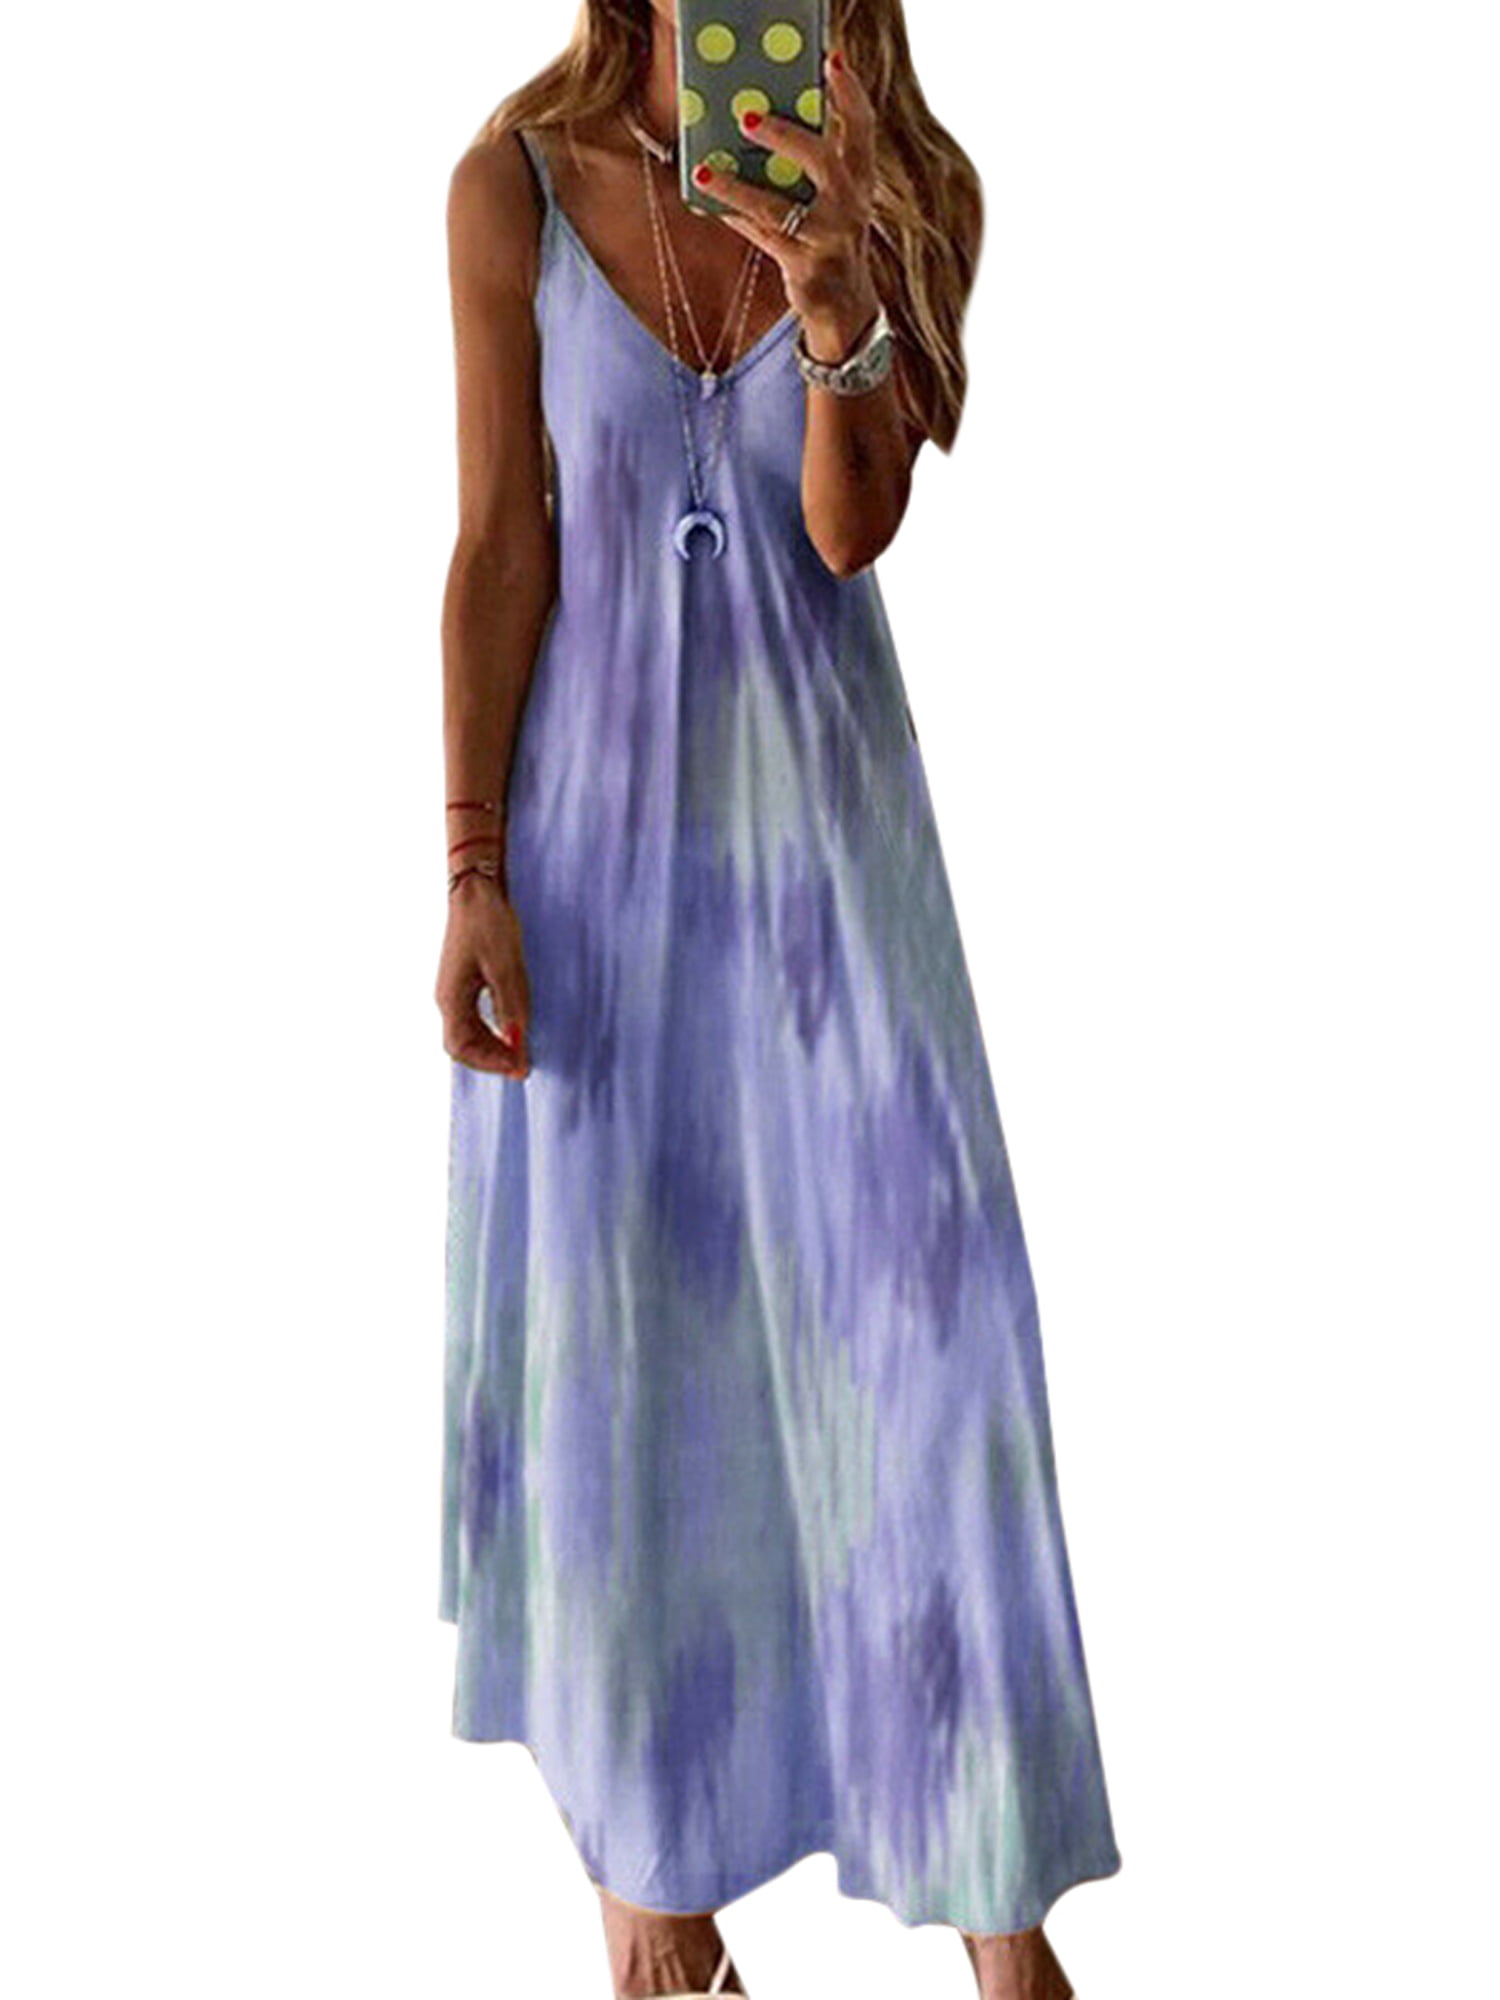 Women Tie Dye Floral Maxi Dress Summer Beach Casual Sundress Plus Size